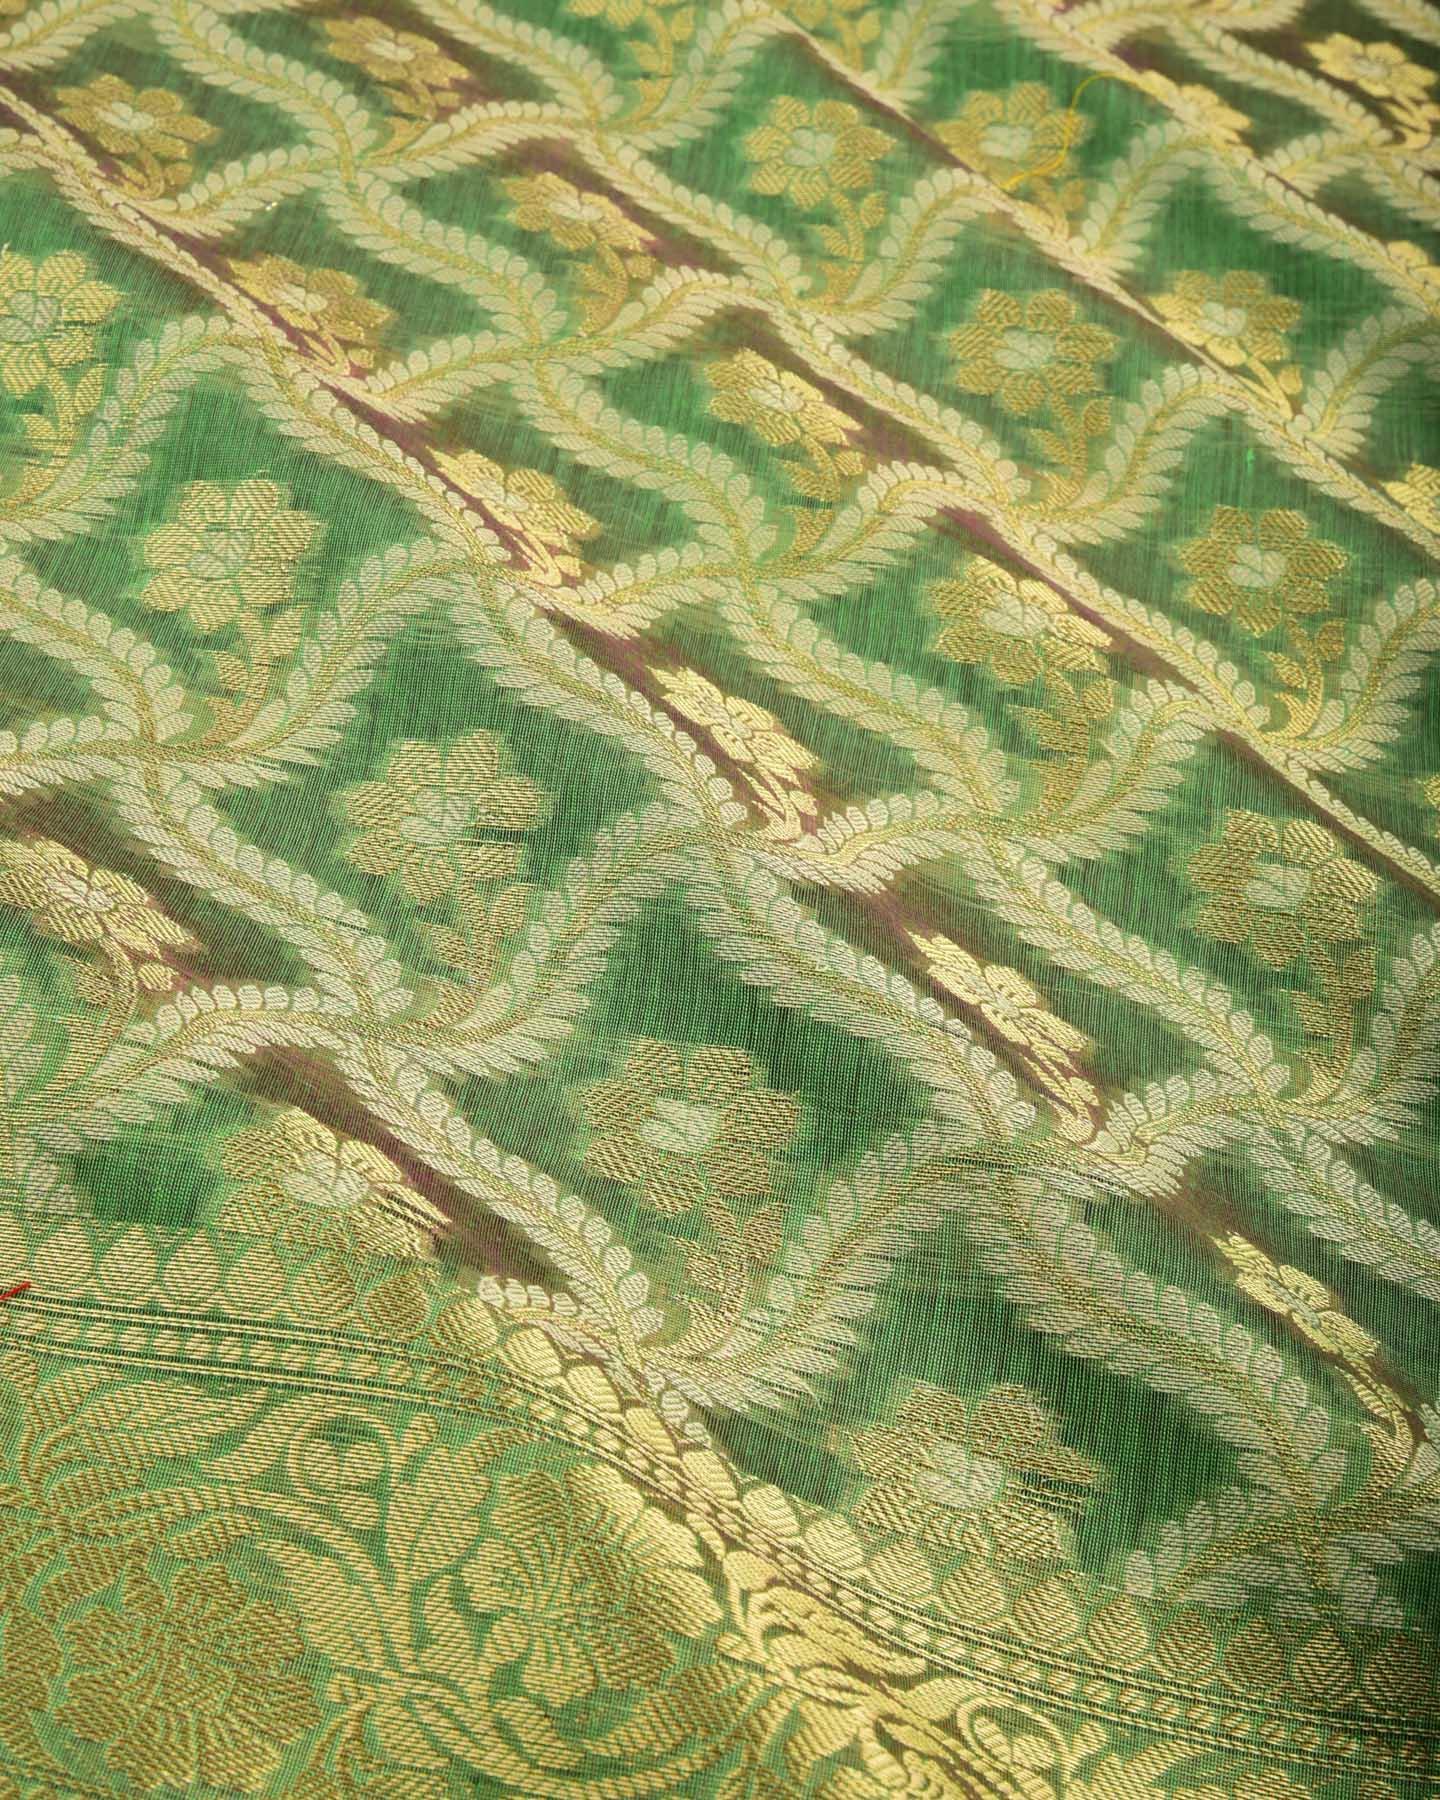 Shot Green Banarasi Zari and Resham Jaal Cutwork Brocade Woven Cotton Silk Saree - By HolyWeaves, Benares